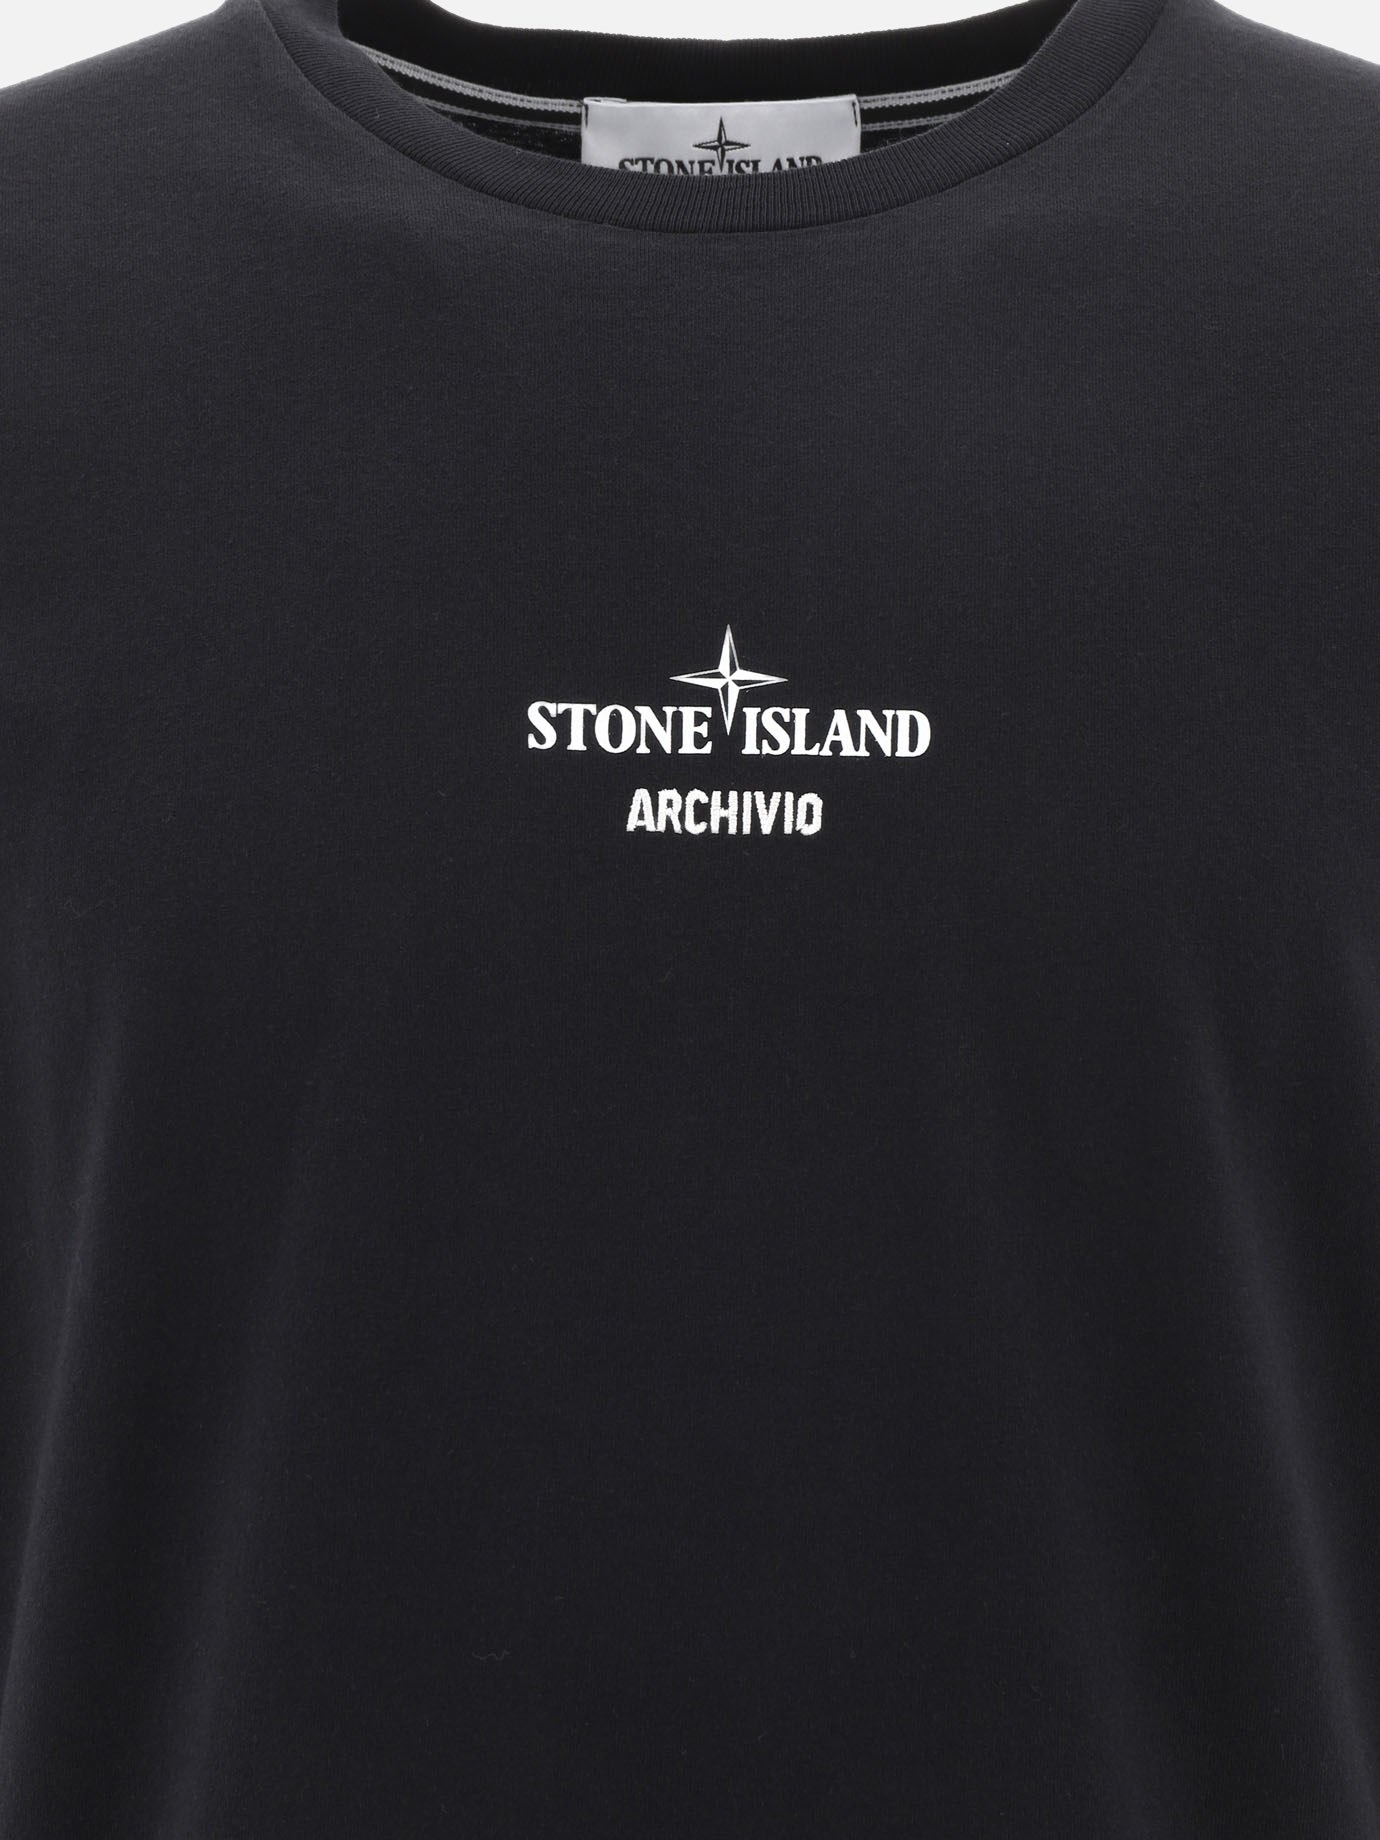 T-shirt  Archivio PVC  by Stone Island